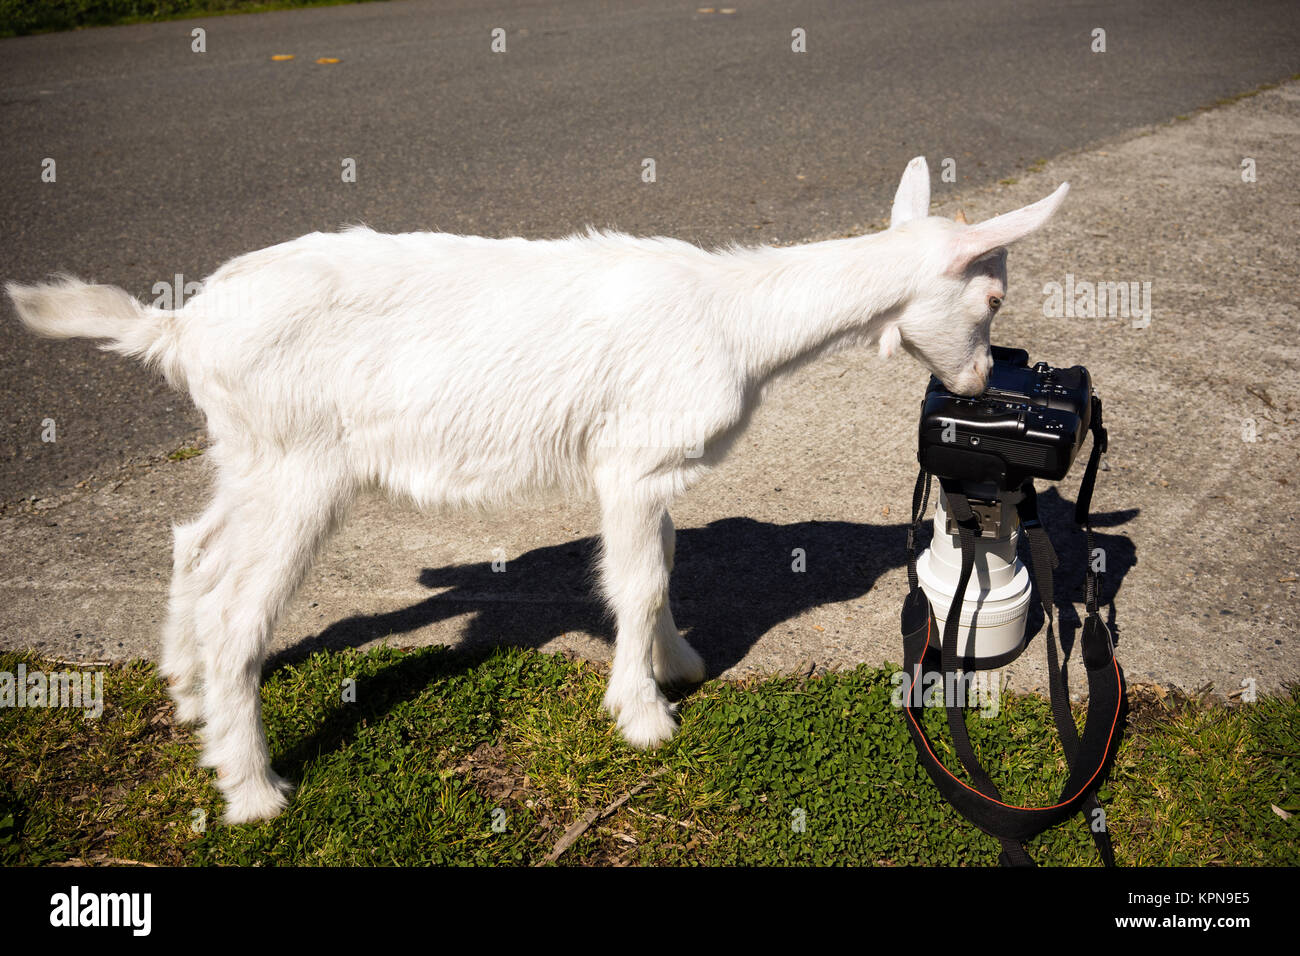 Newborn Animal Albino Goat Explores Camera Long Zoom Lens Stock Photo